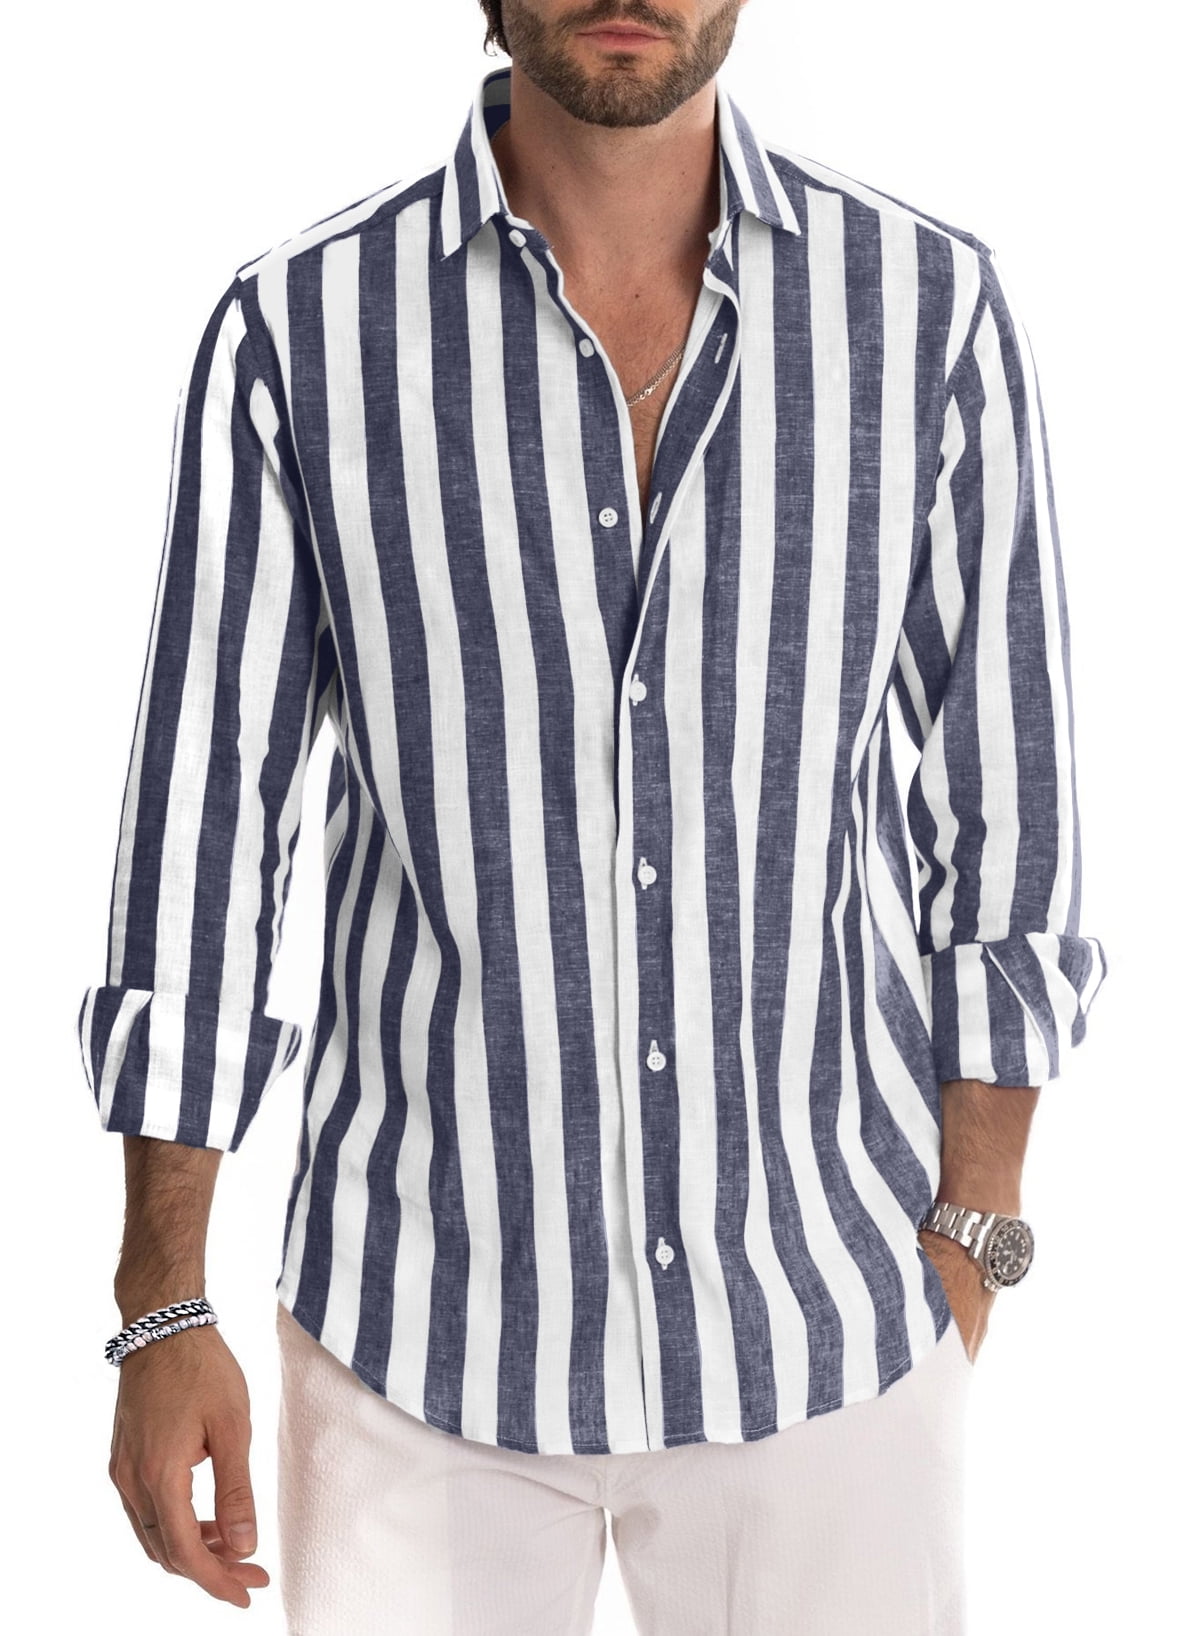 Chase Secret Men's Shirts Long Sleeve Button Down Striped Casual Linen ...